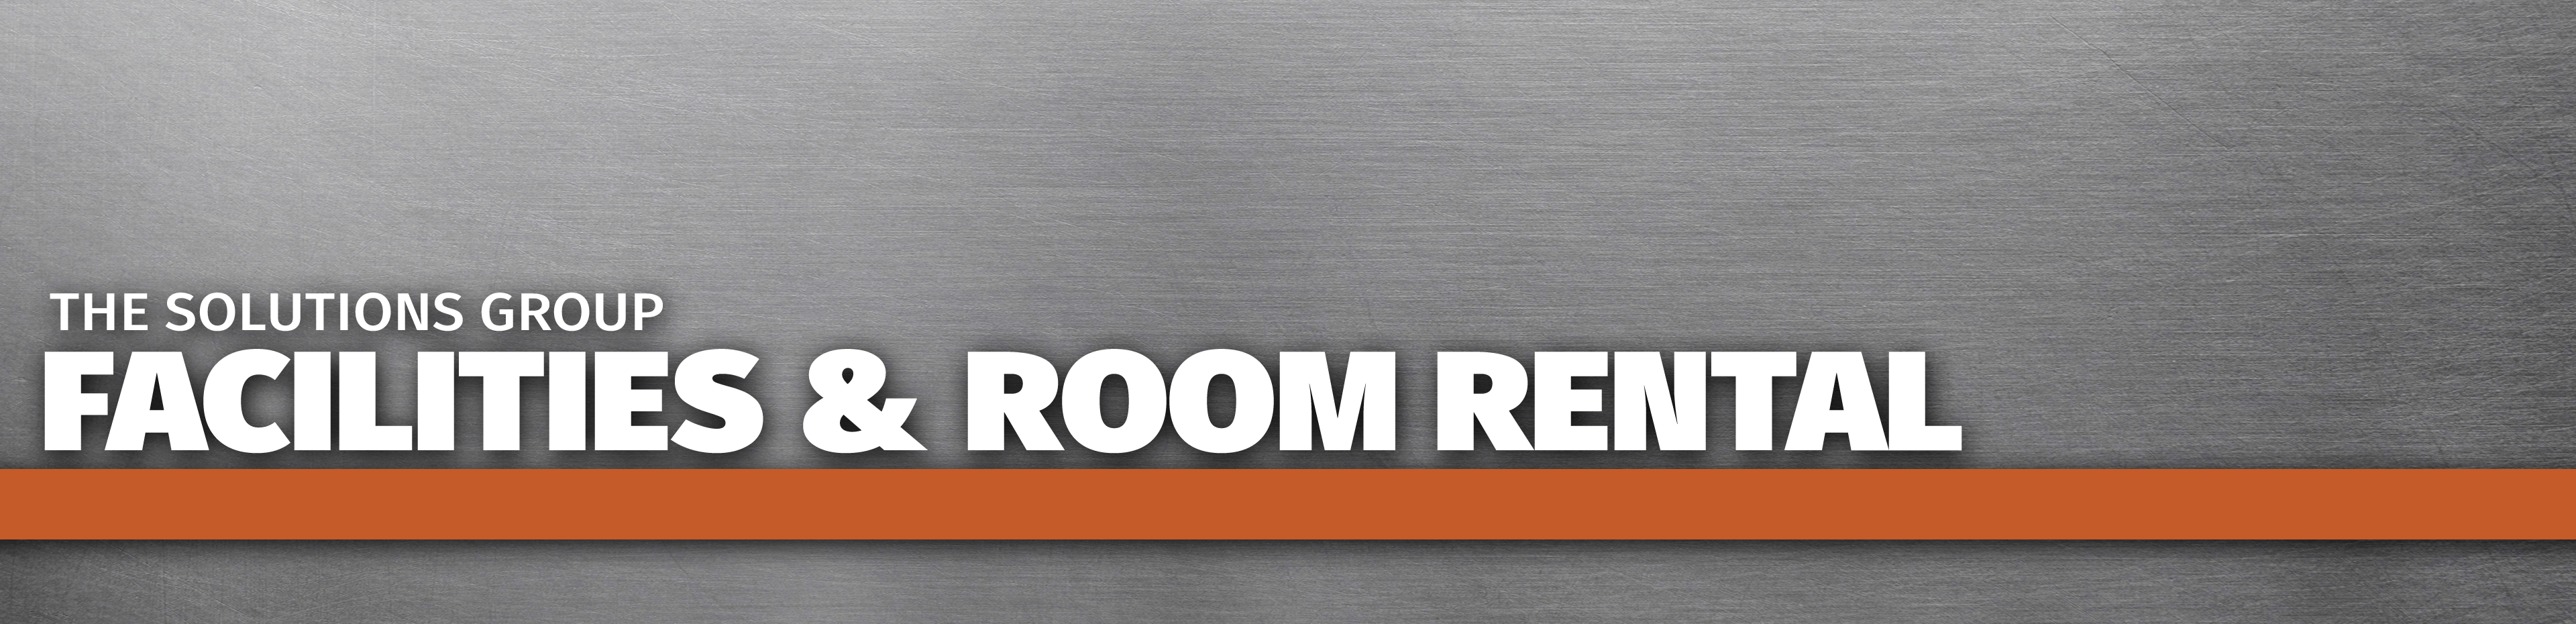 Facilities and Room Rental Header